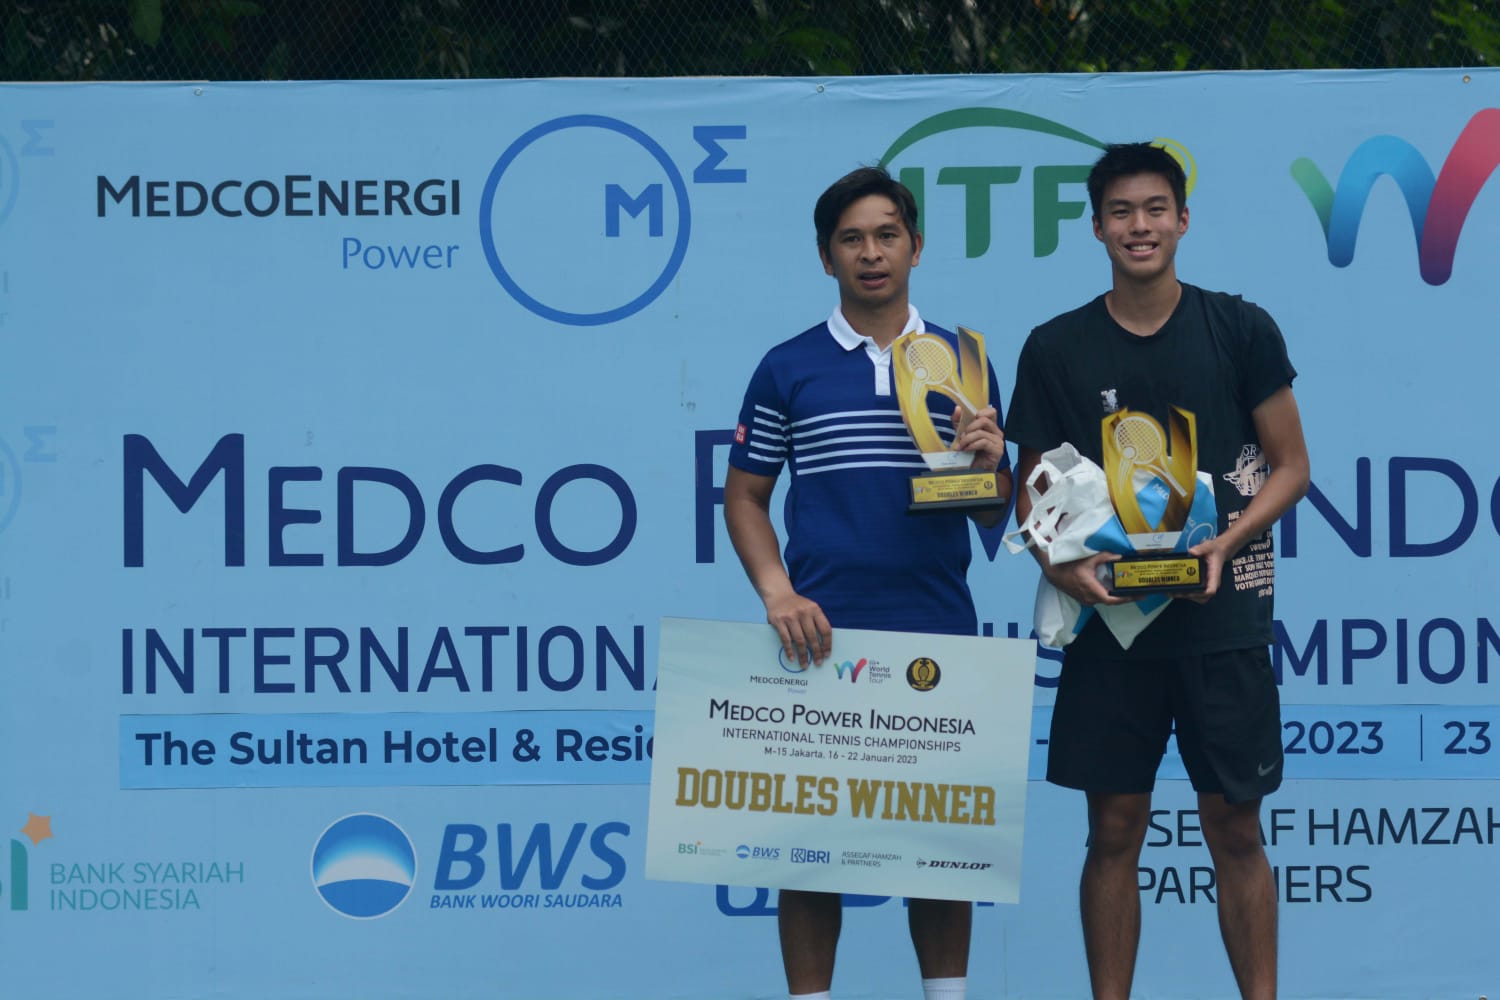 Yes, Nathan/Christoper Rungkat Juara Medco Power Indonesian International Tennis Championships 2023